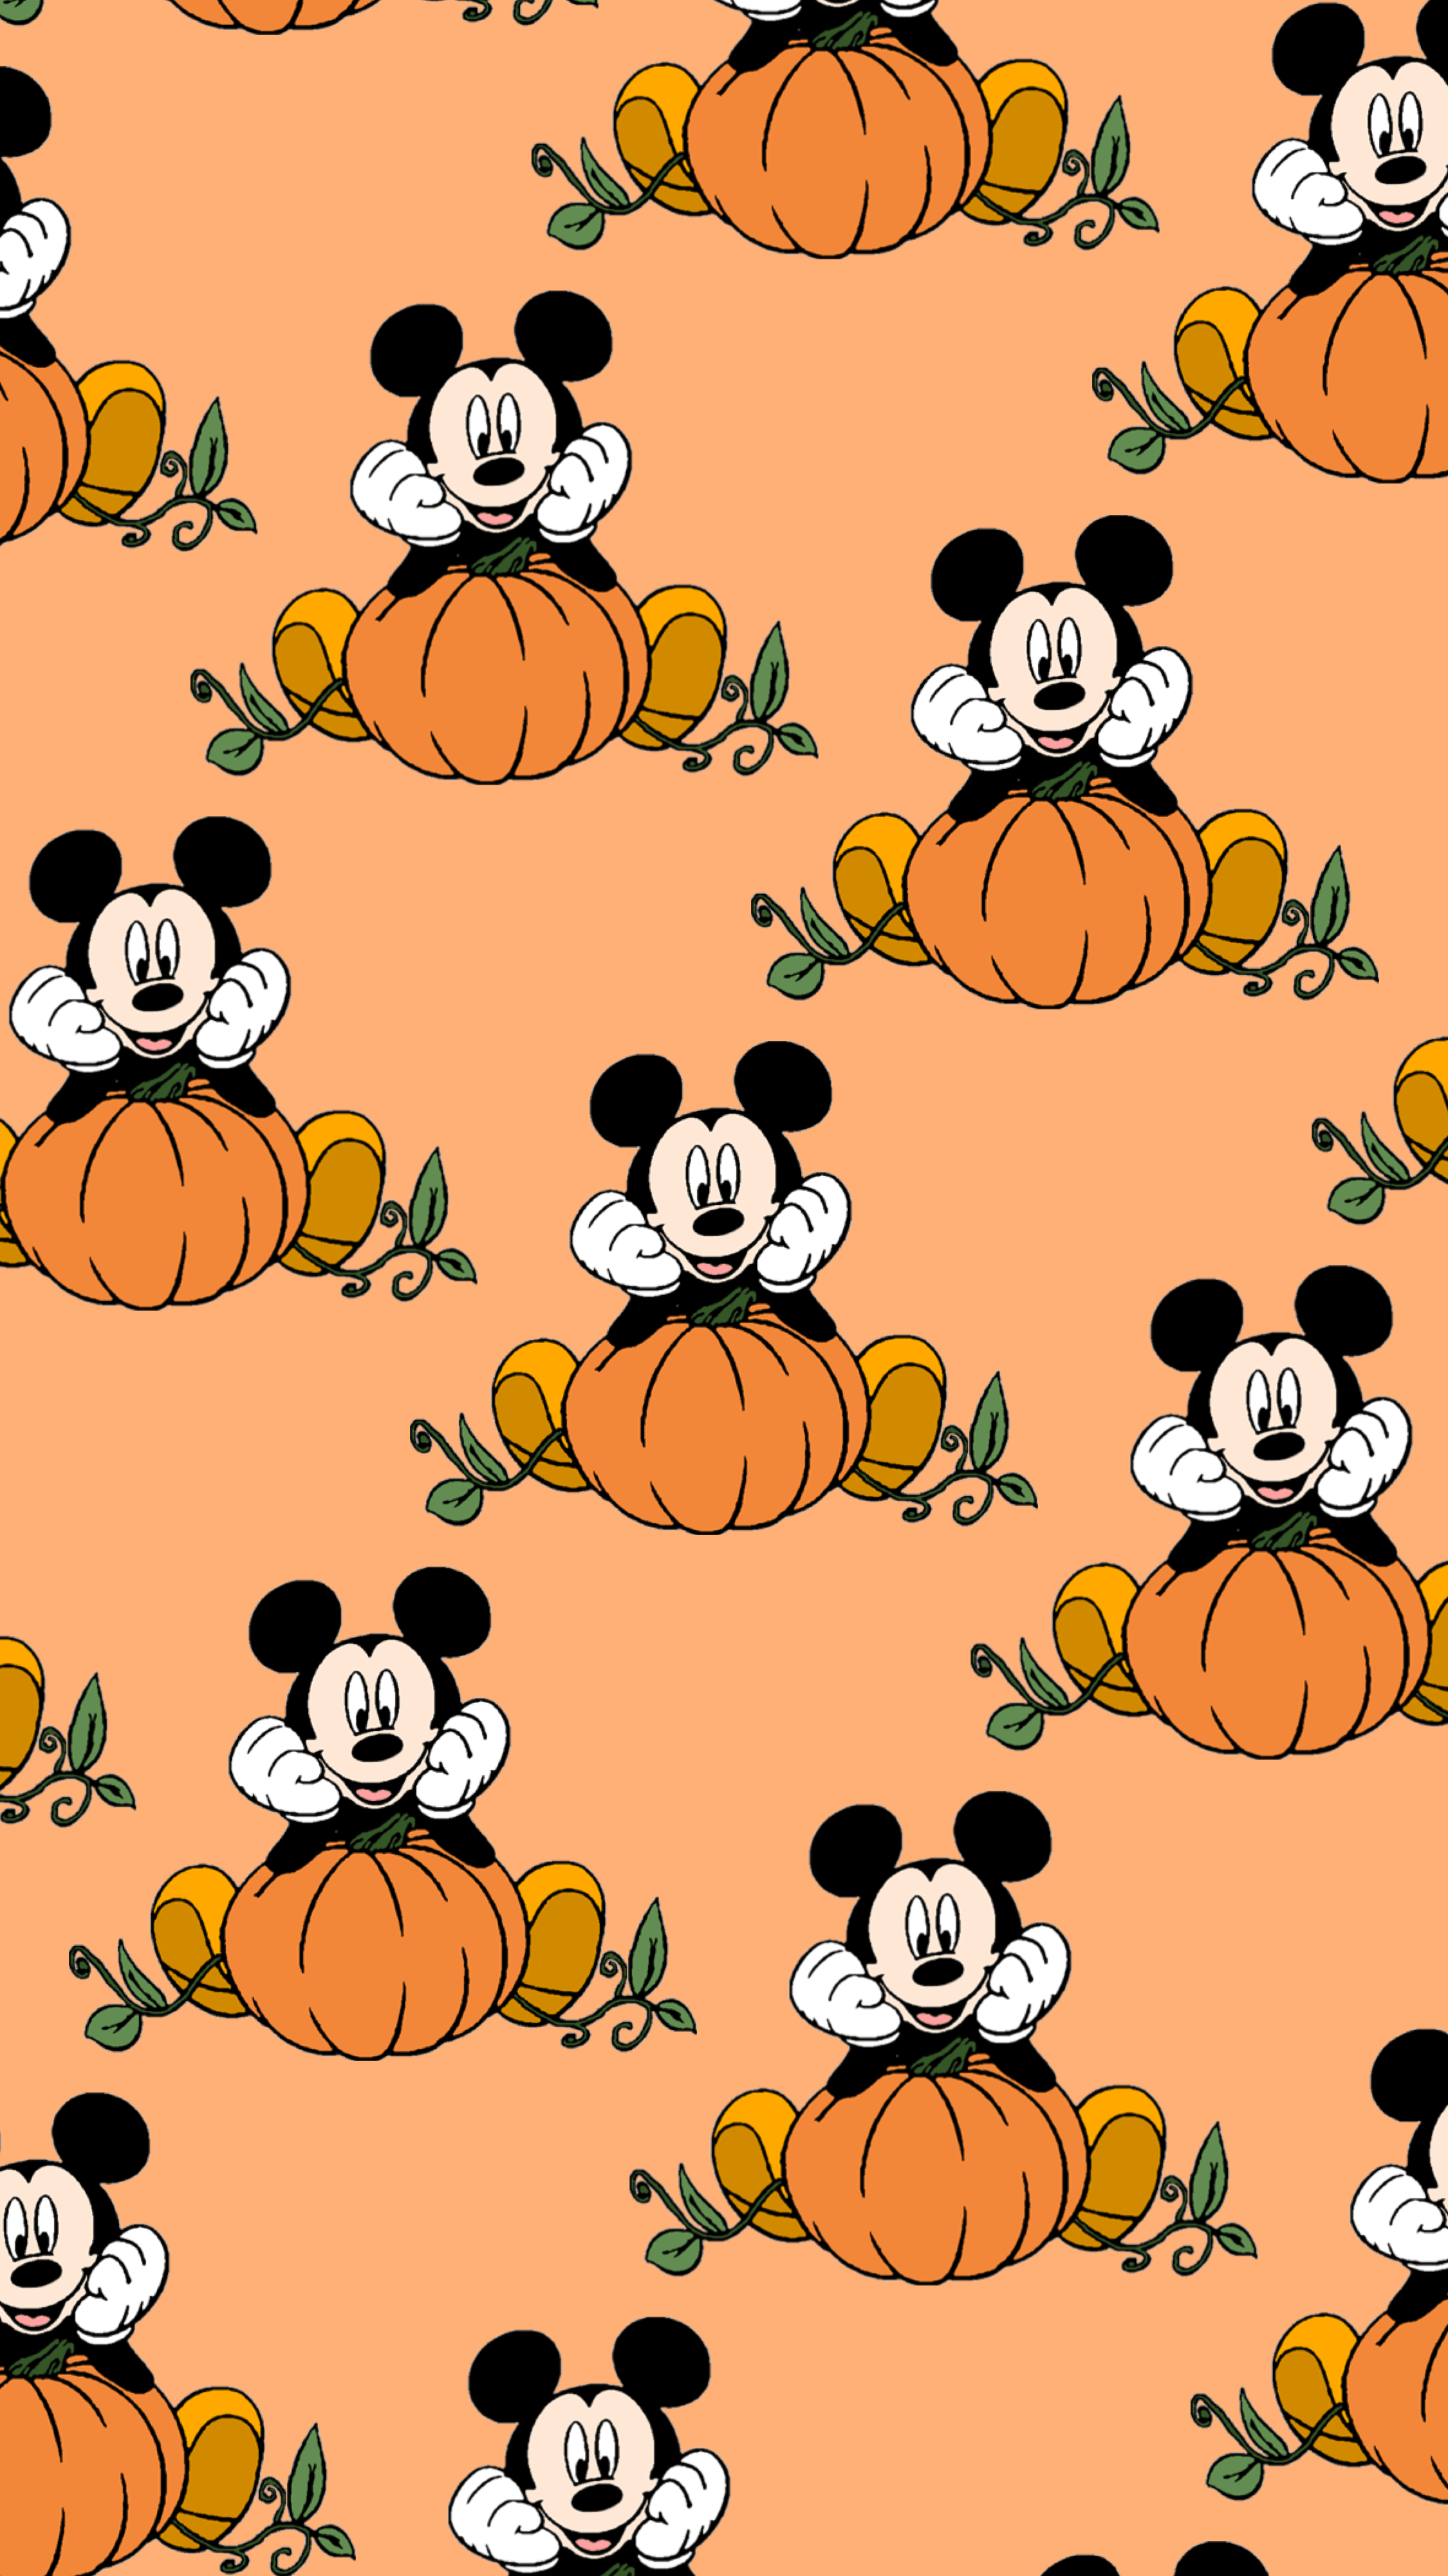 Minnie's Wallpaper of Mickey. Halloween wallpaper iphone, Fall